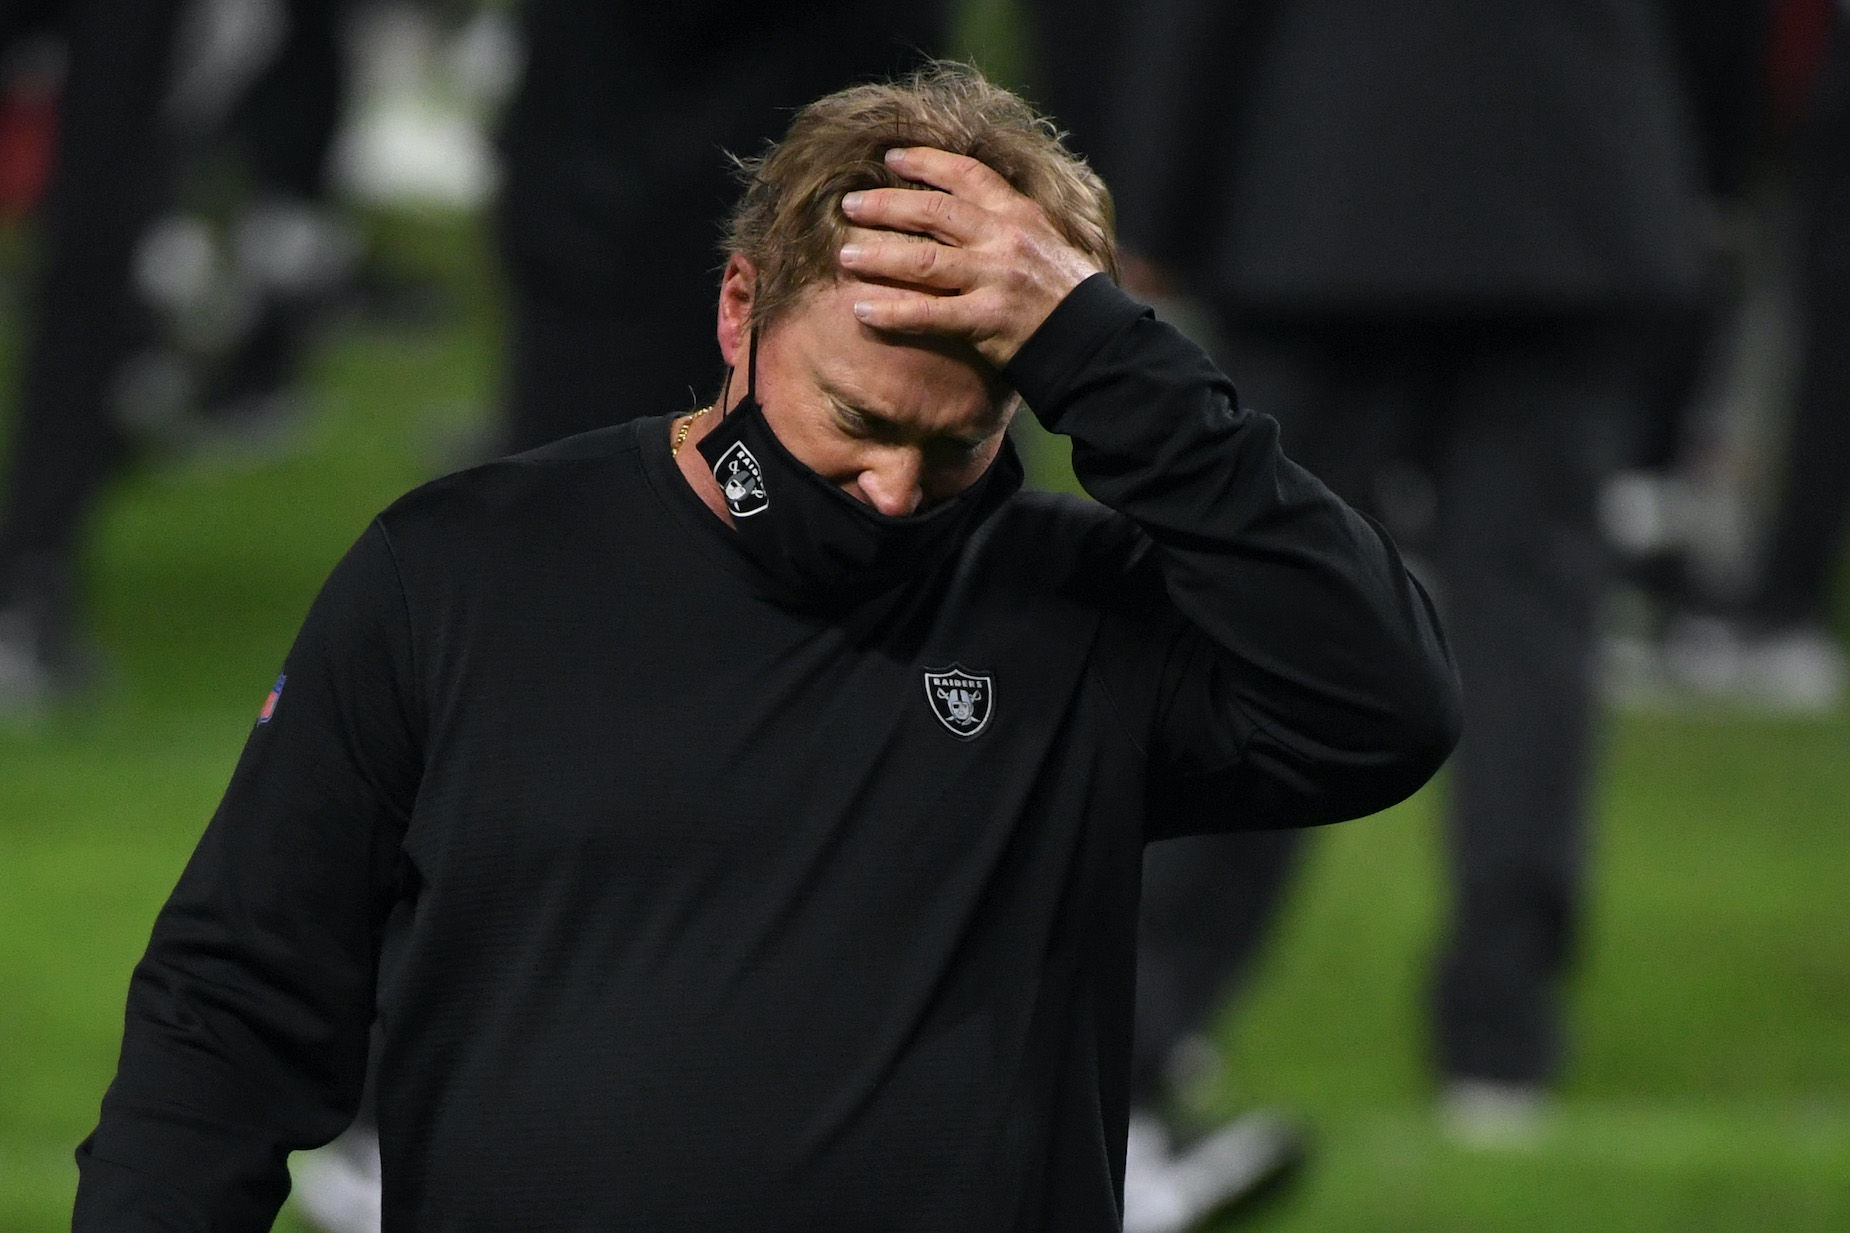 Raiders head coach Jon Gruden reacts to a loss.